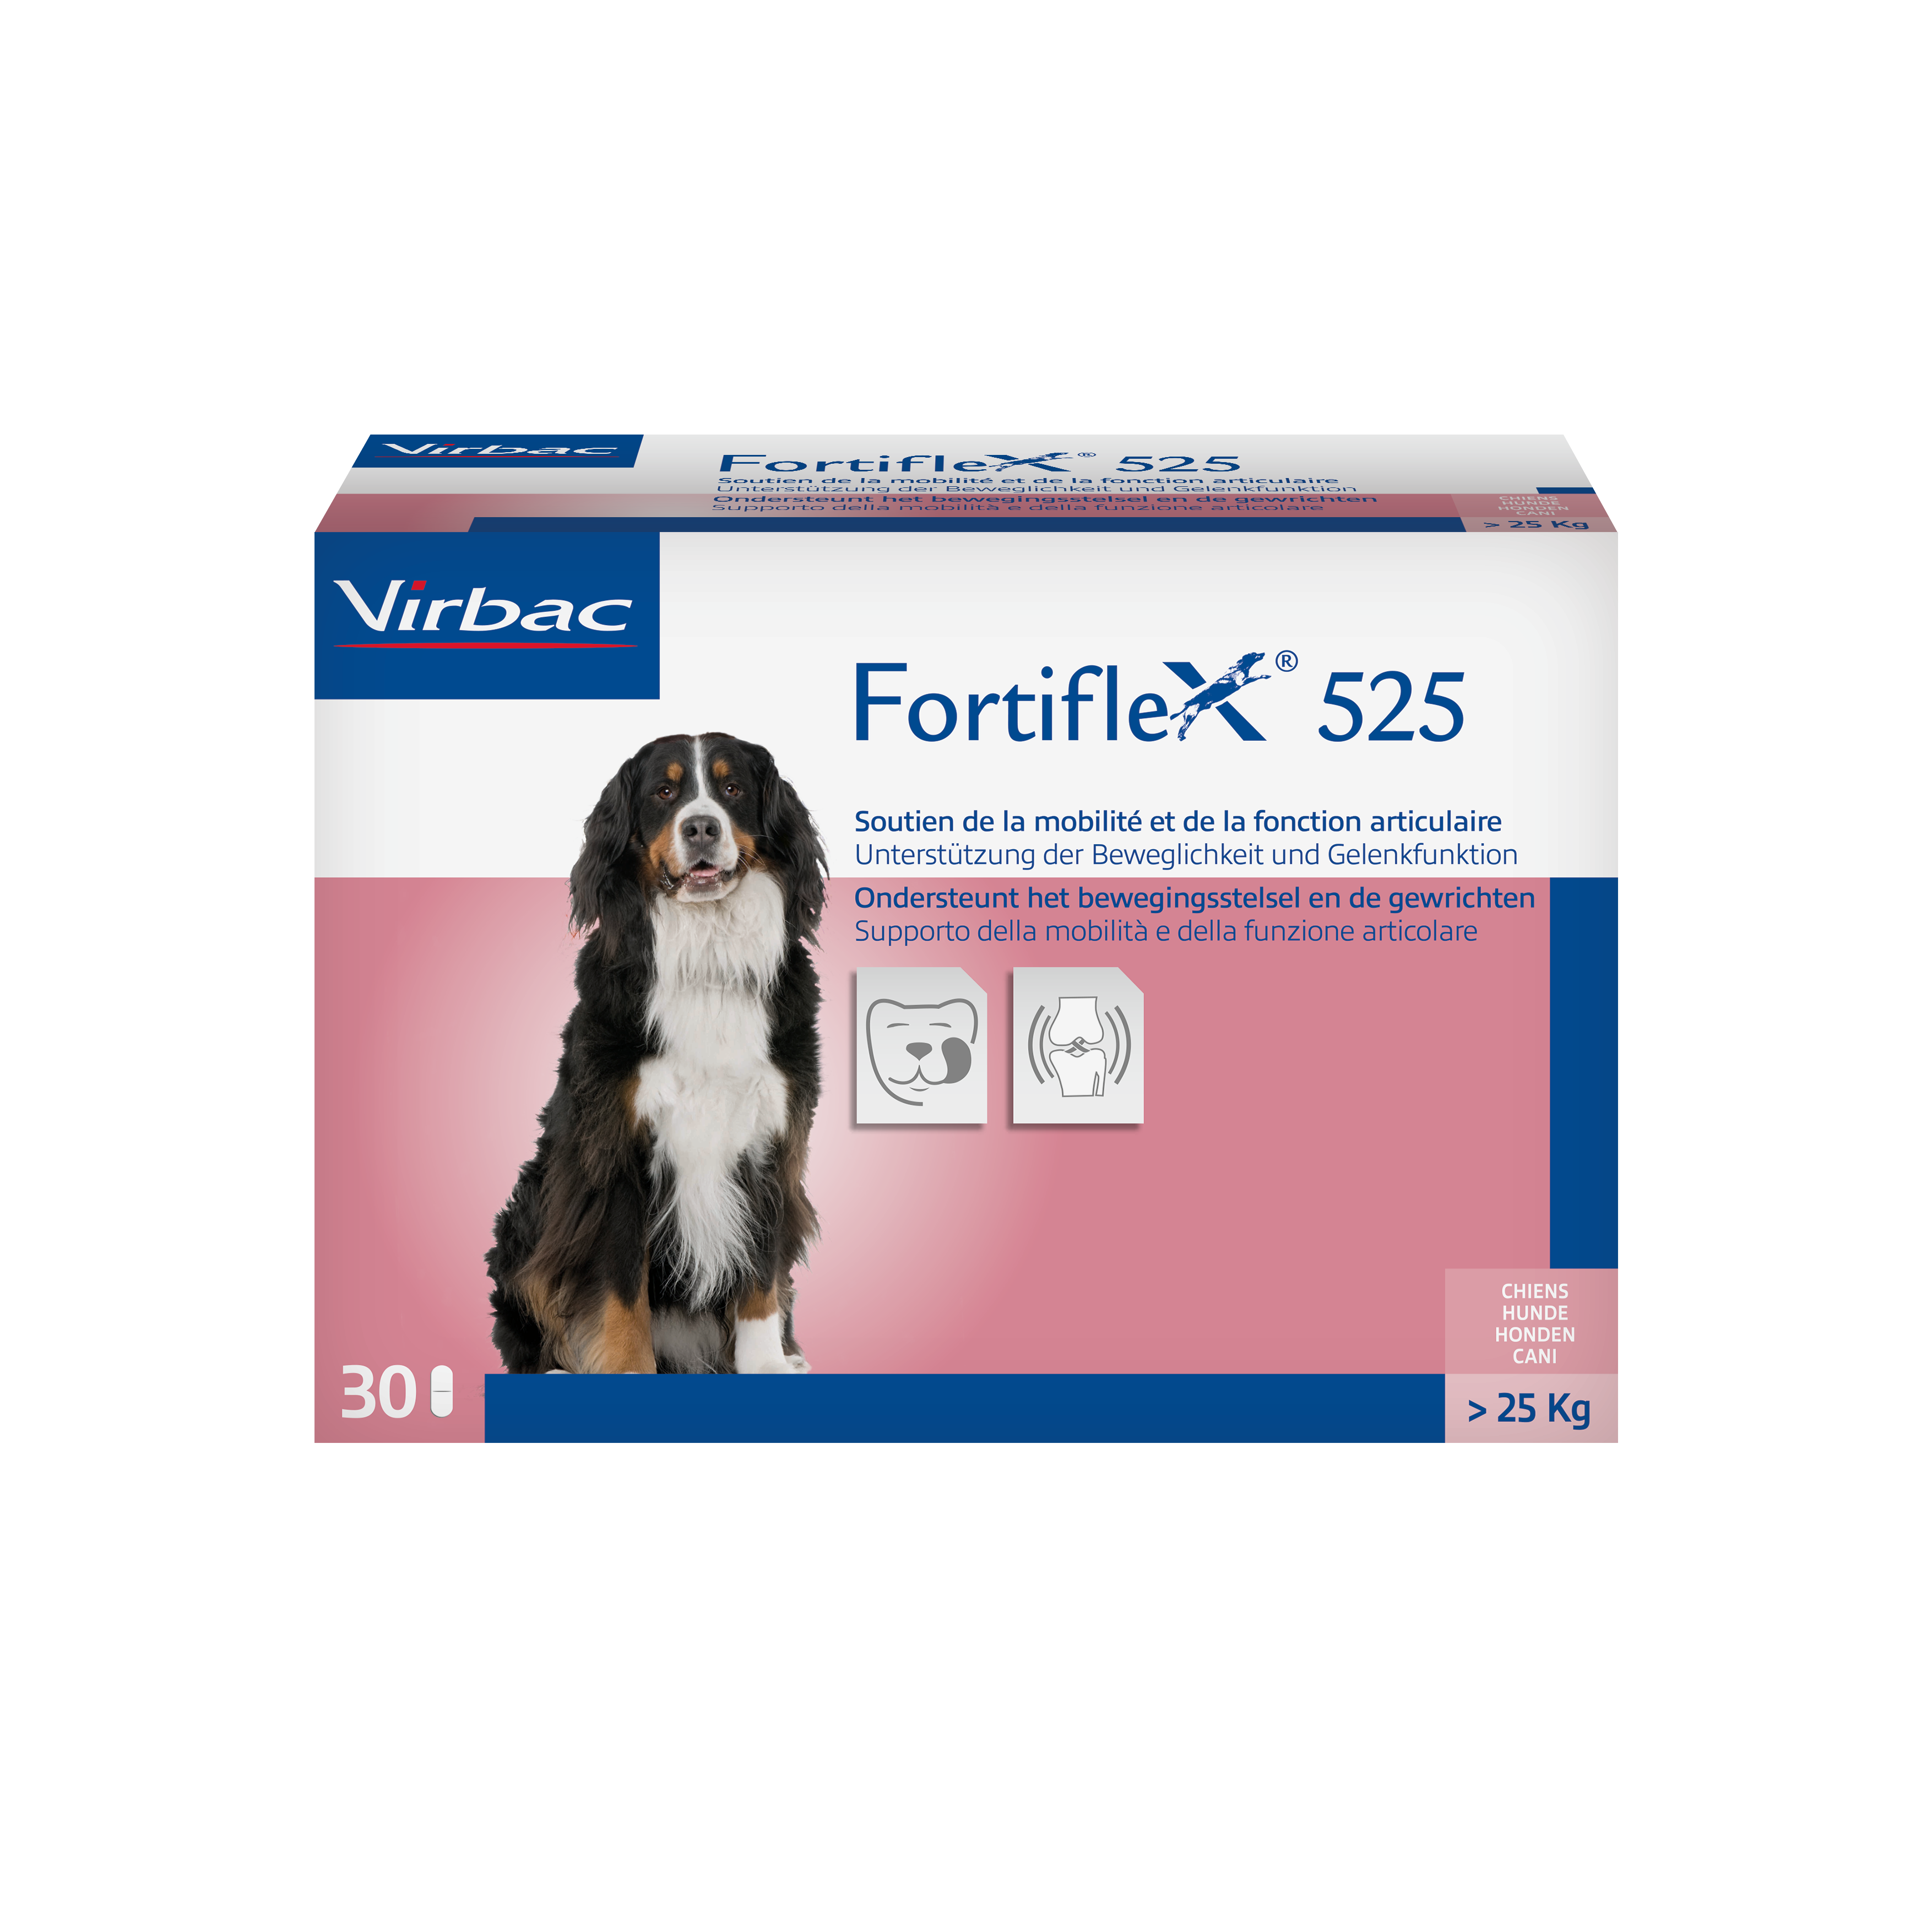 Fortiflex 525mg - Ergänzungsfuttermittel für Hunde